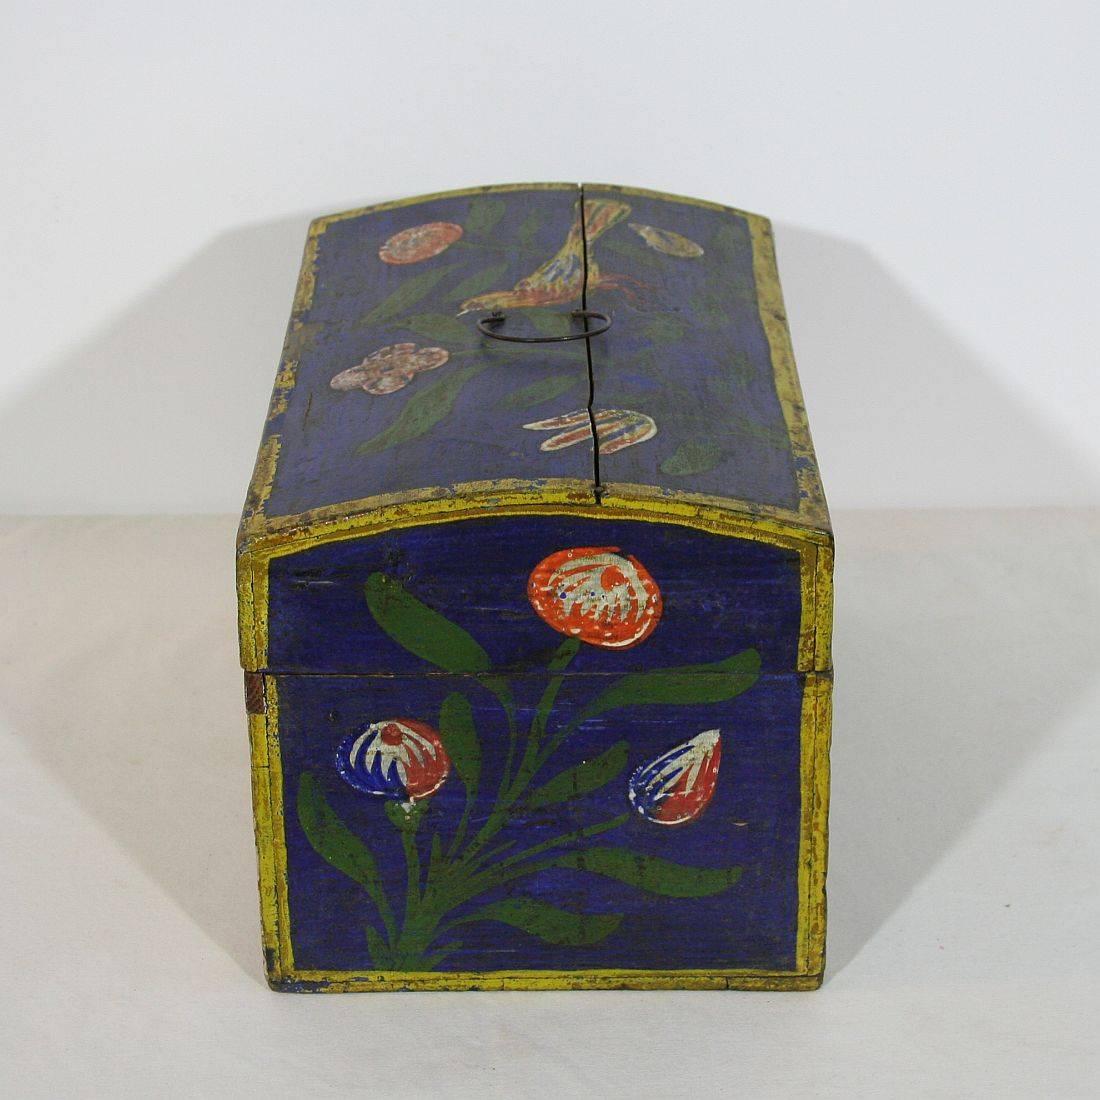 19th Century French Folk Art Weddingbox from Normandy with a Bird 1